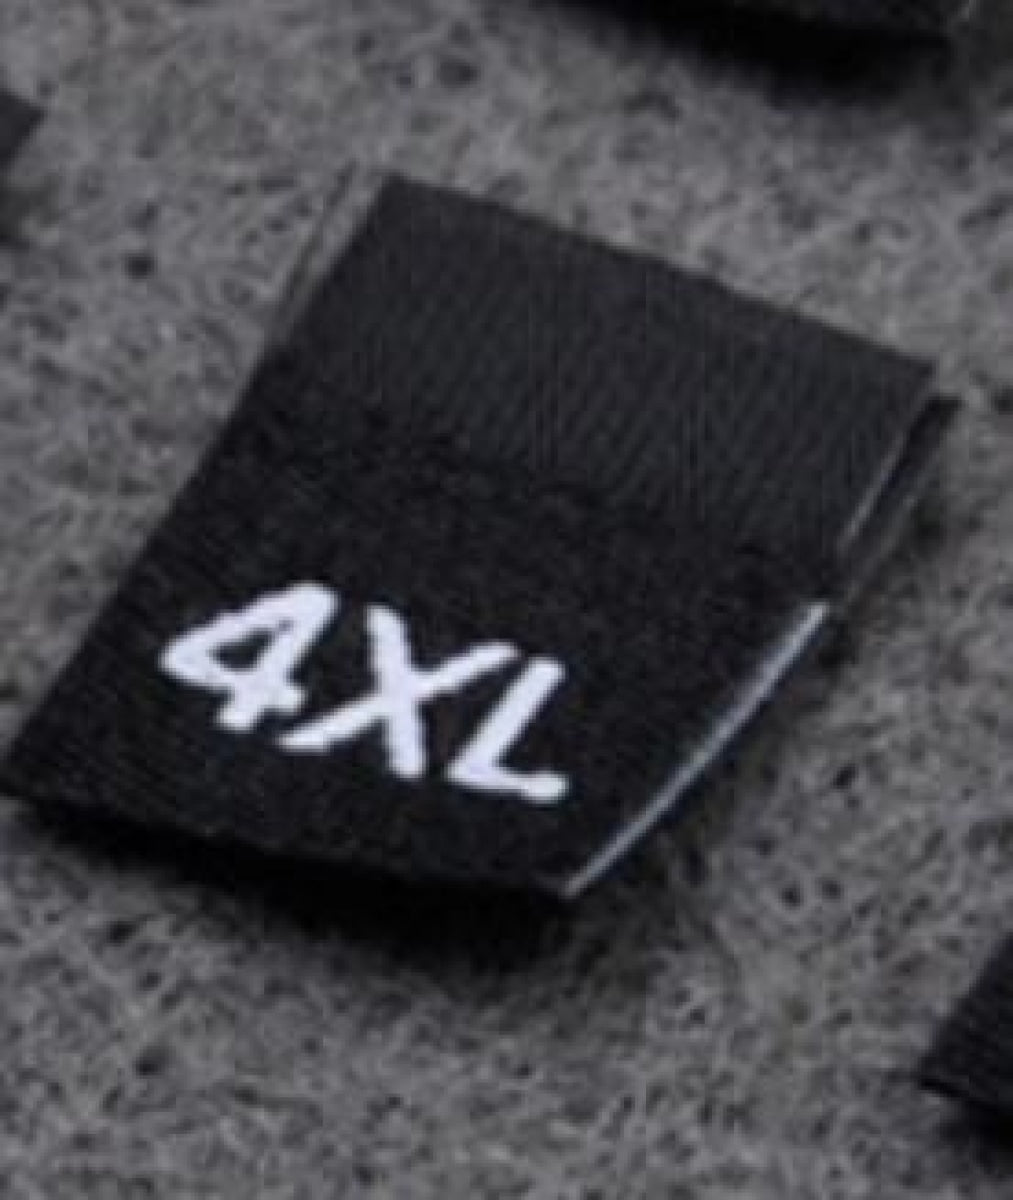 100pcs Clothing Size Label Tags XS S M L XL 2XL 3XL 4XL Black Text White Garment Clothes T Shirt Dress Fabric - 4XL Black - Asia Sell